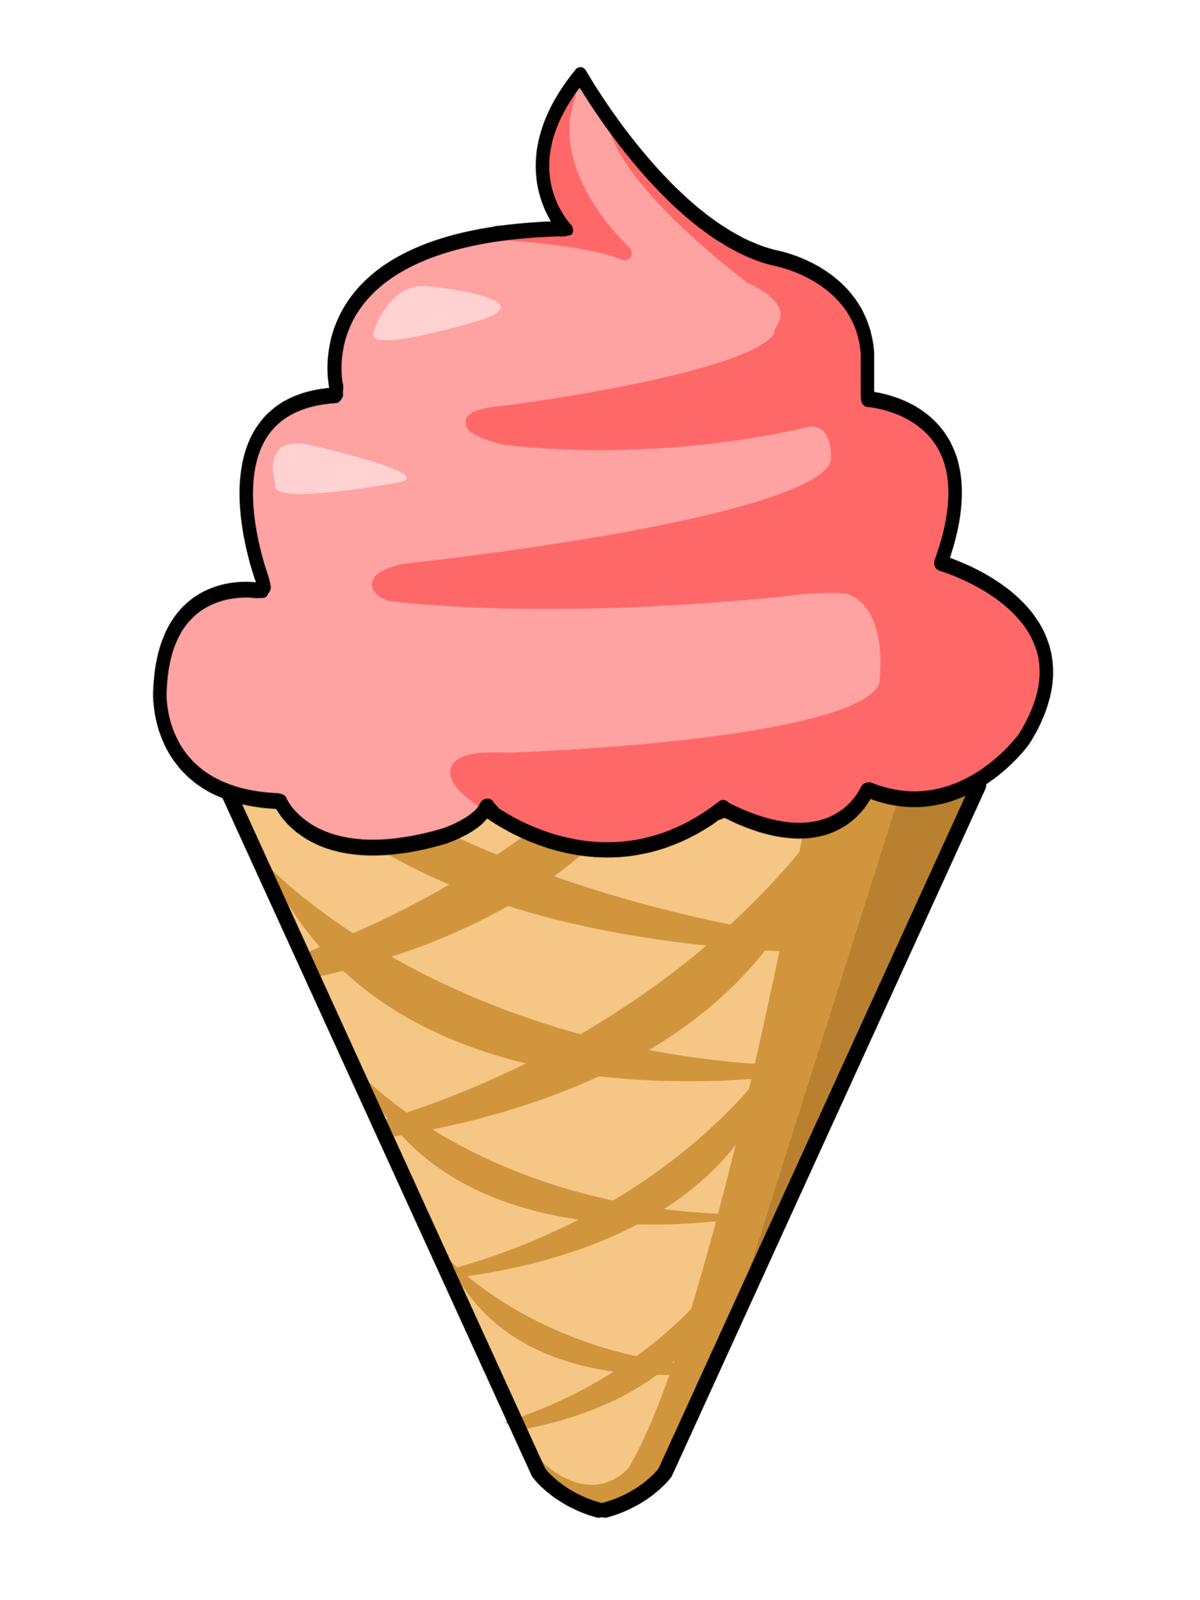 Ice cream cone ice cream animated clipart clipart kid 4